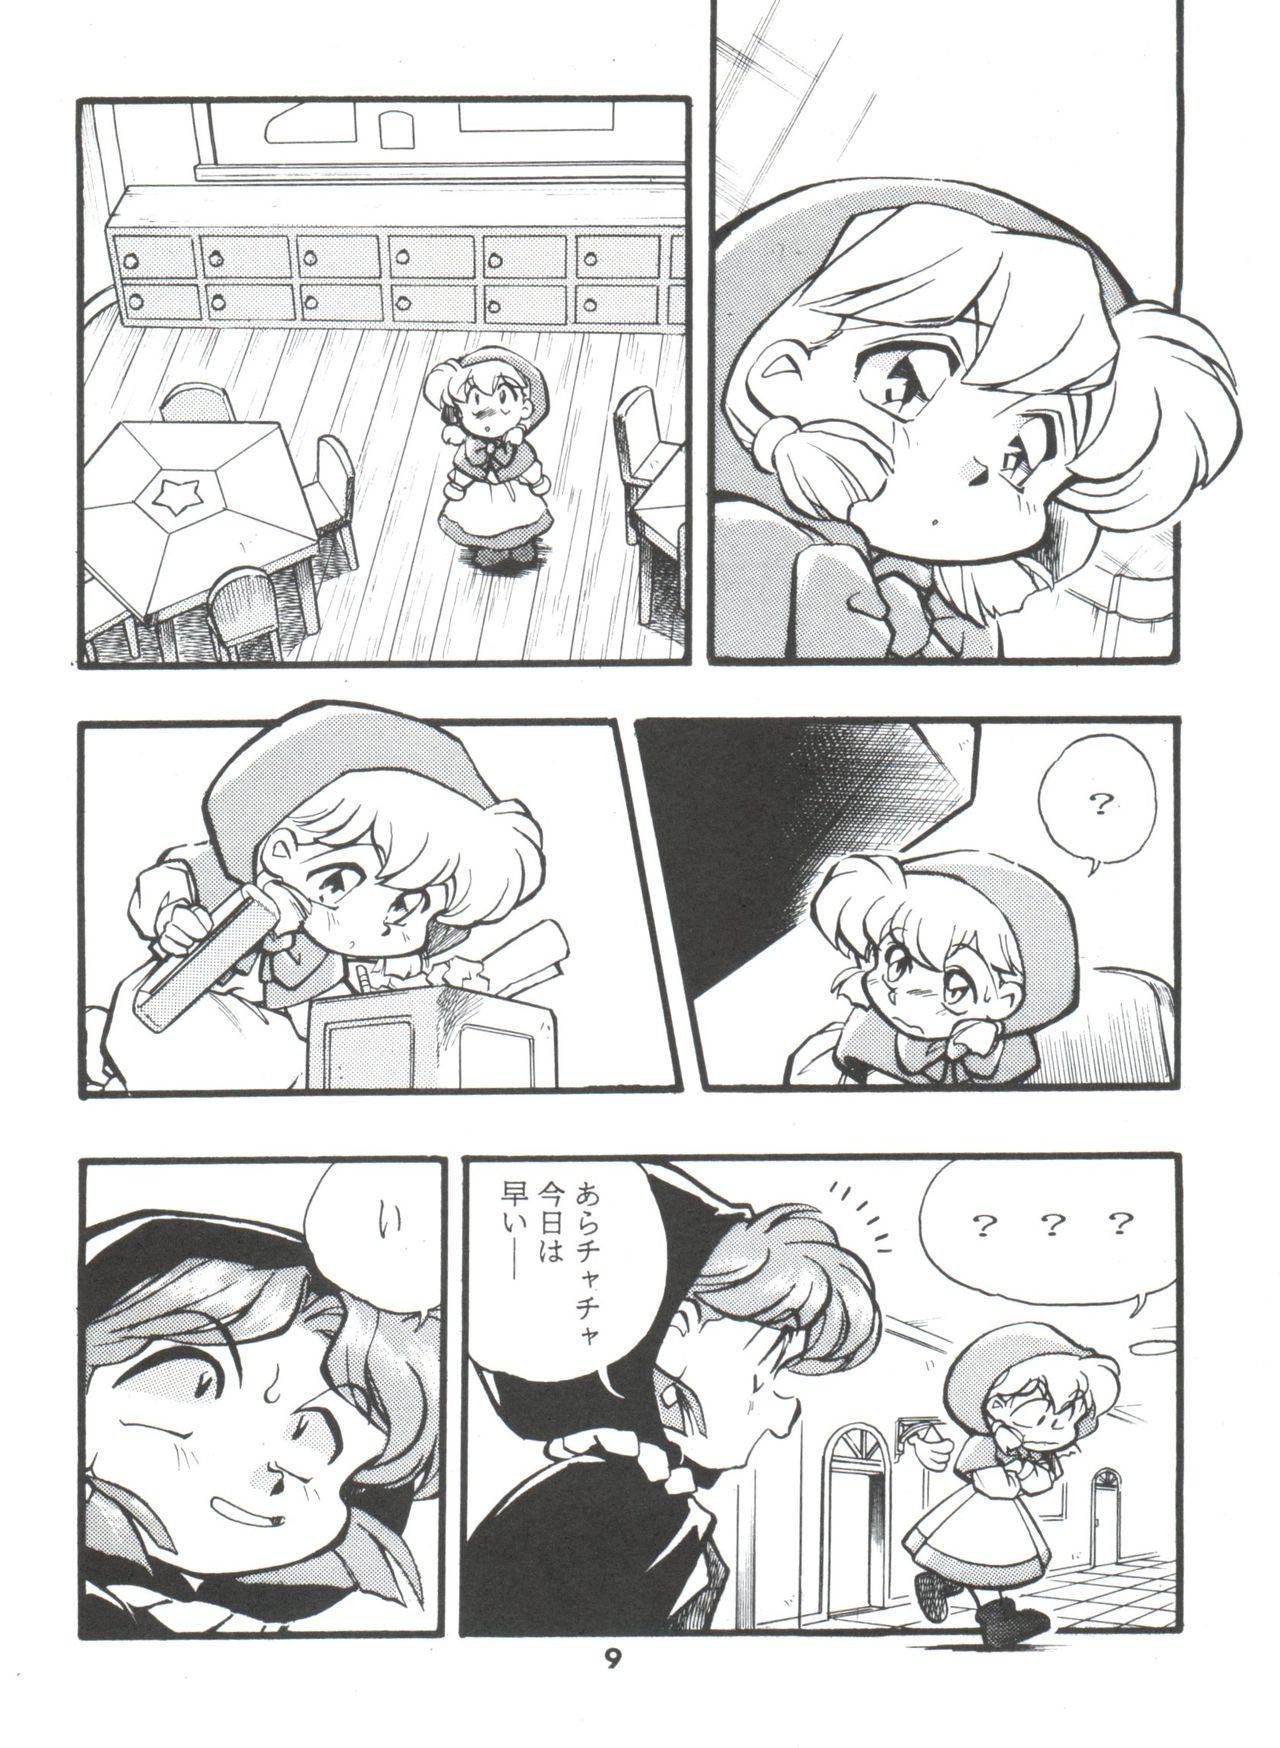 Farting DK-1 III - Akazukin cha cha Lesbians - Page 9